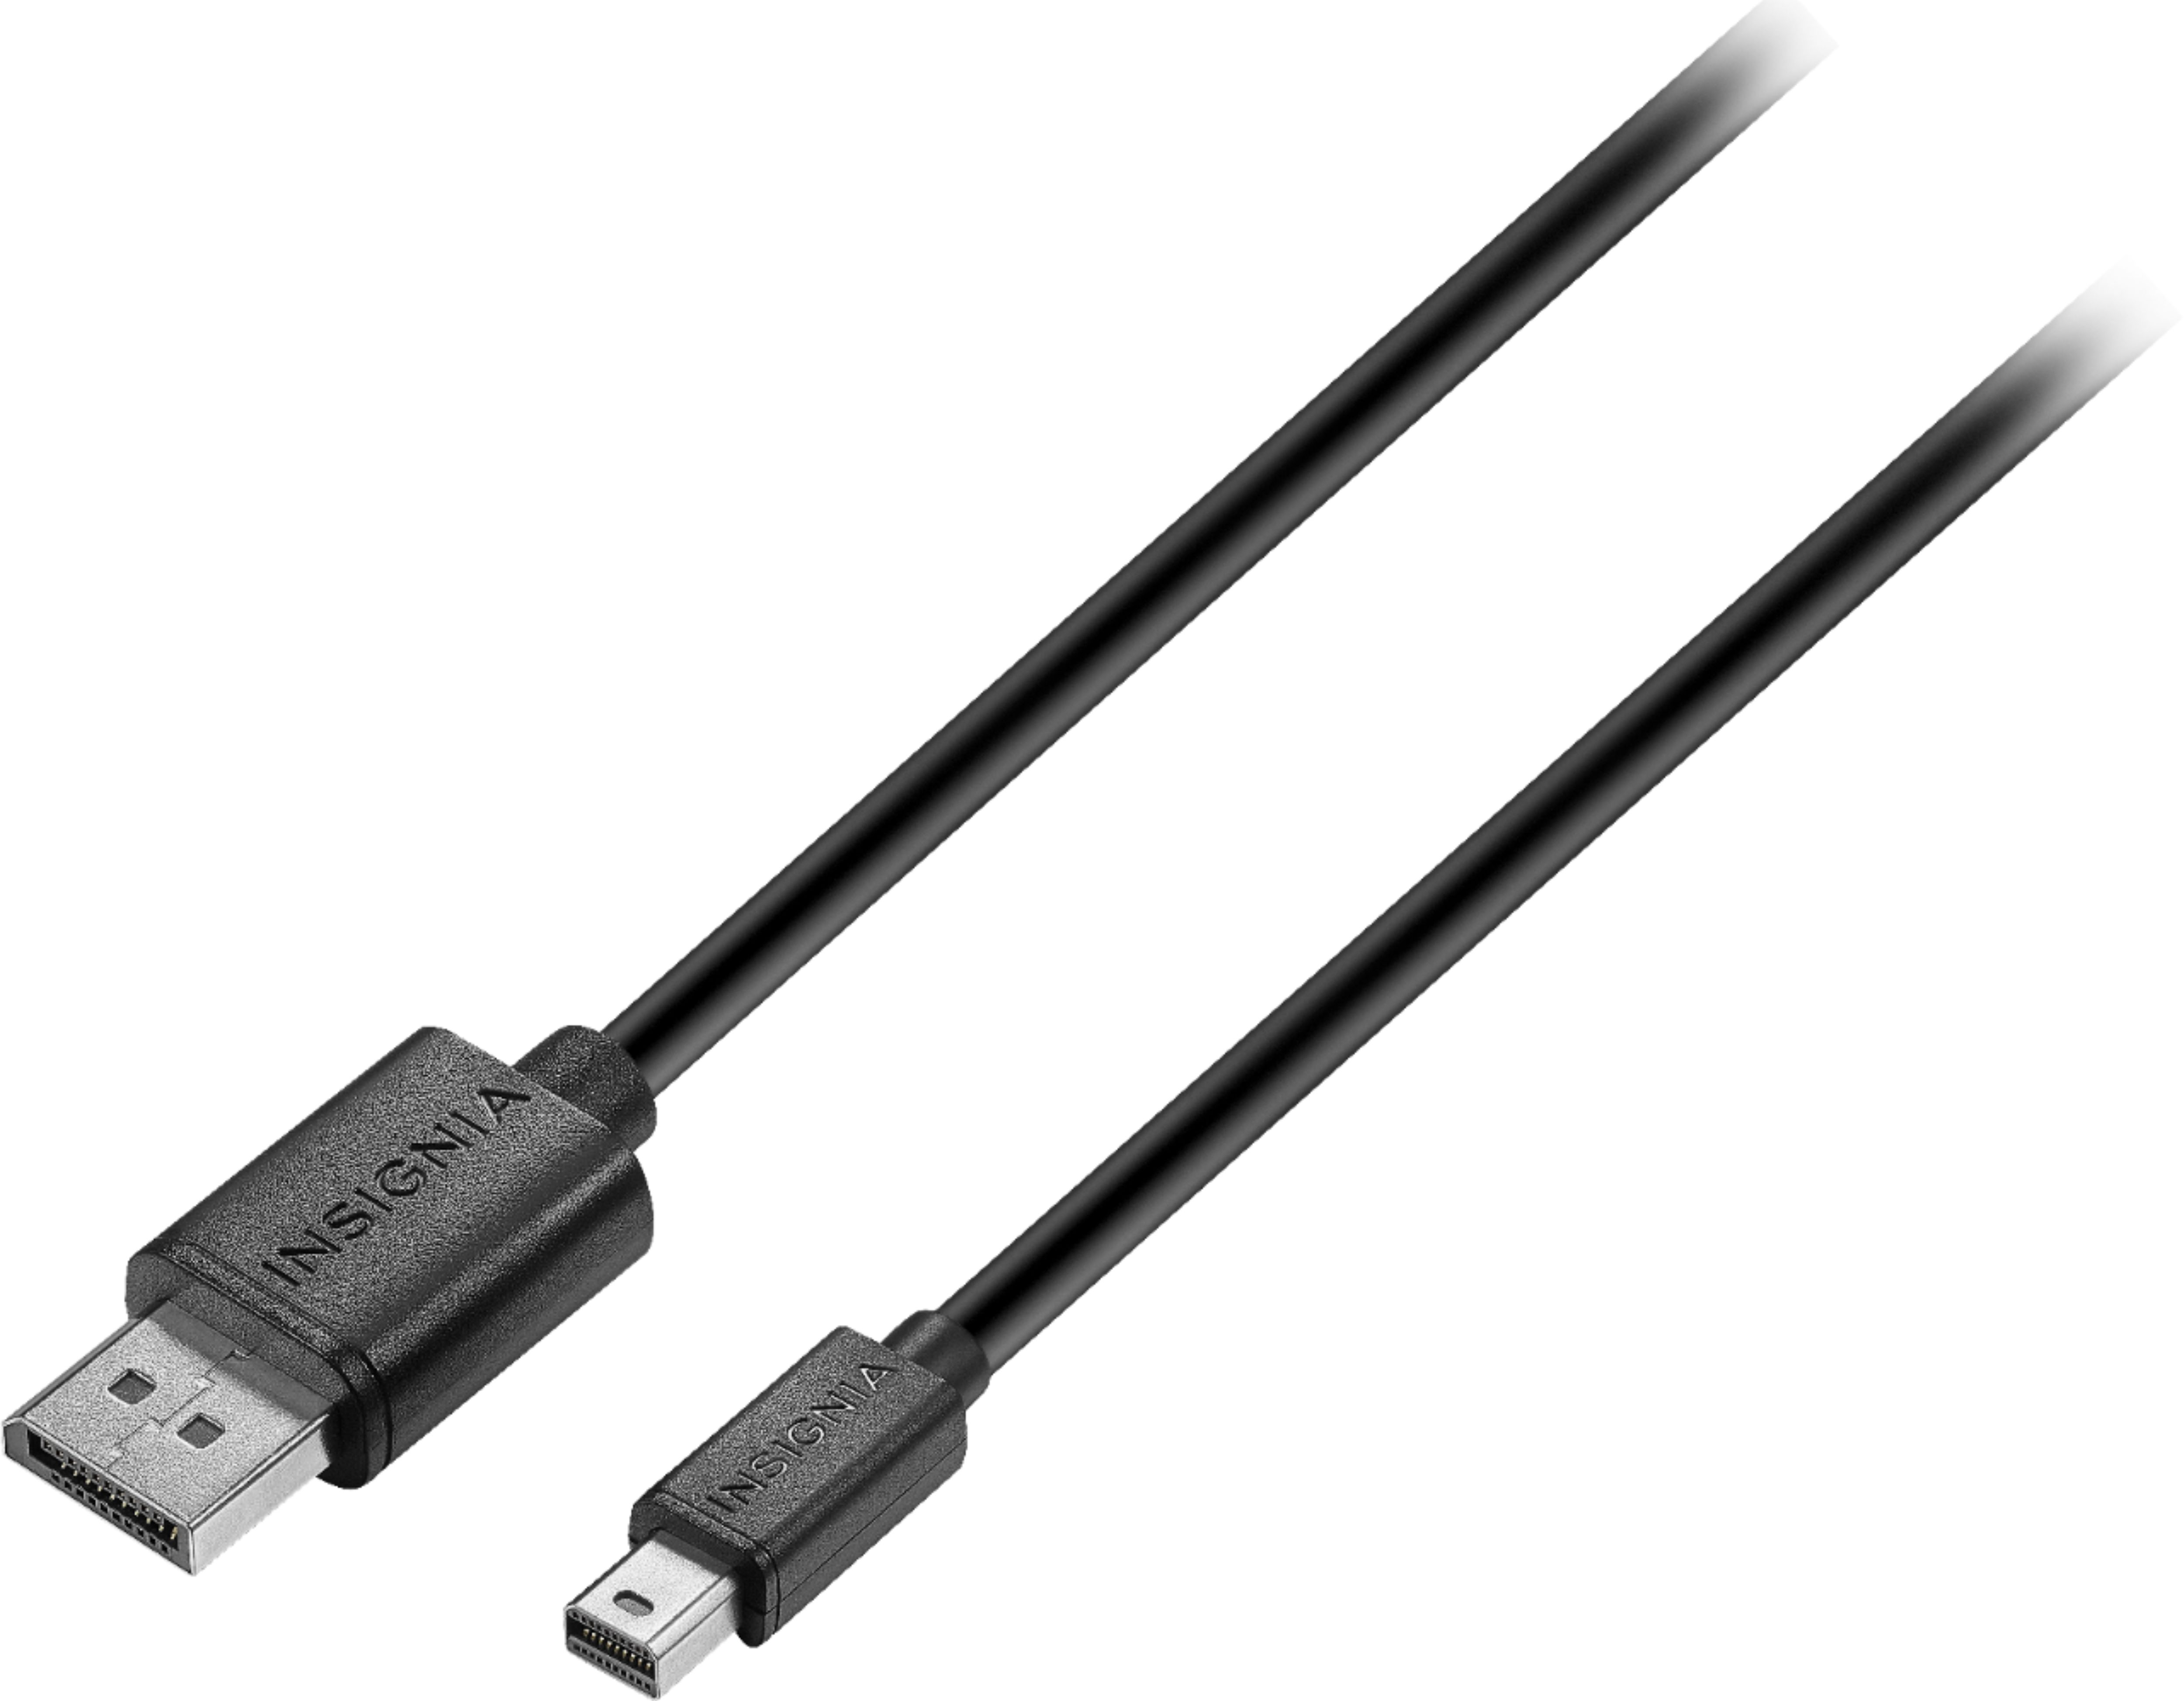 Dynex™ 6' DisplayPort-to-DisplayPort Cable Black DX-PD06500 - Best Buy